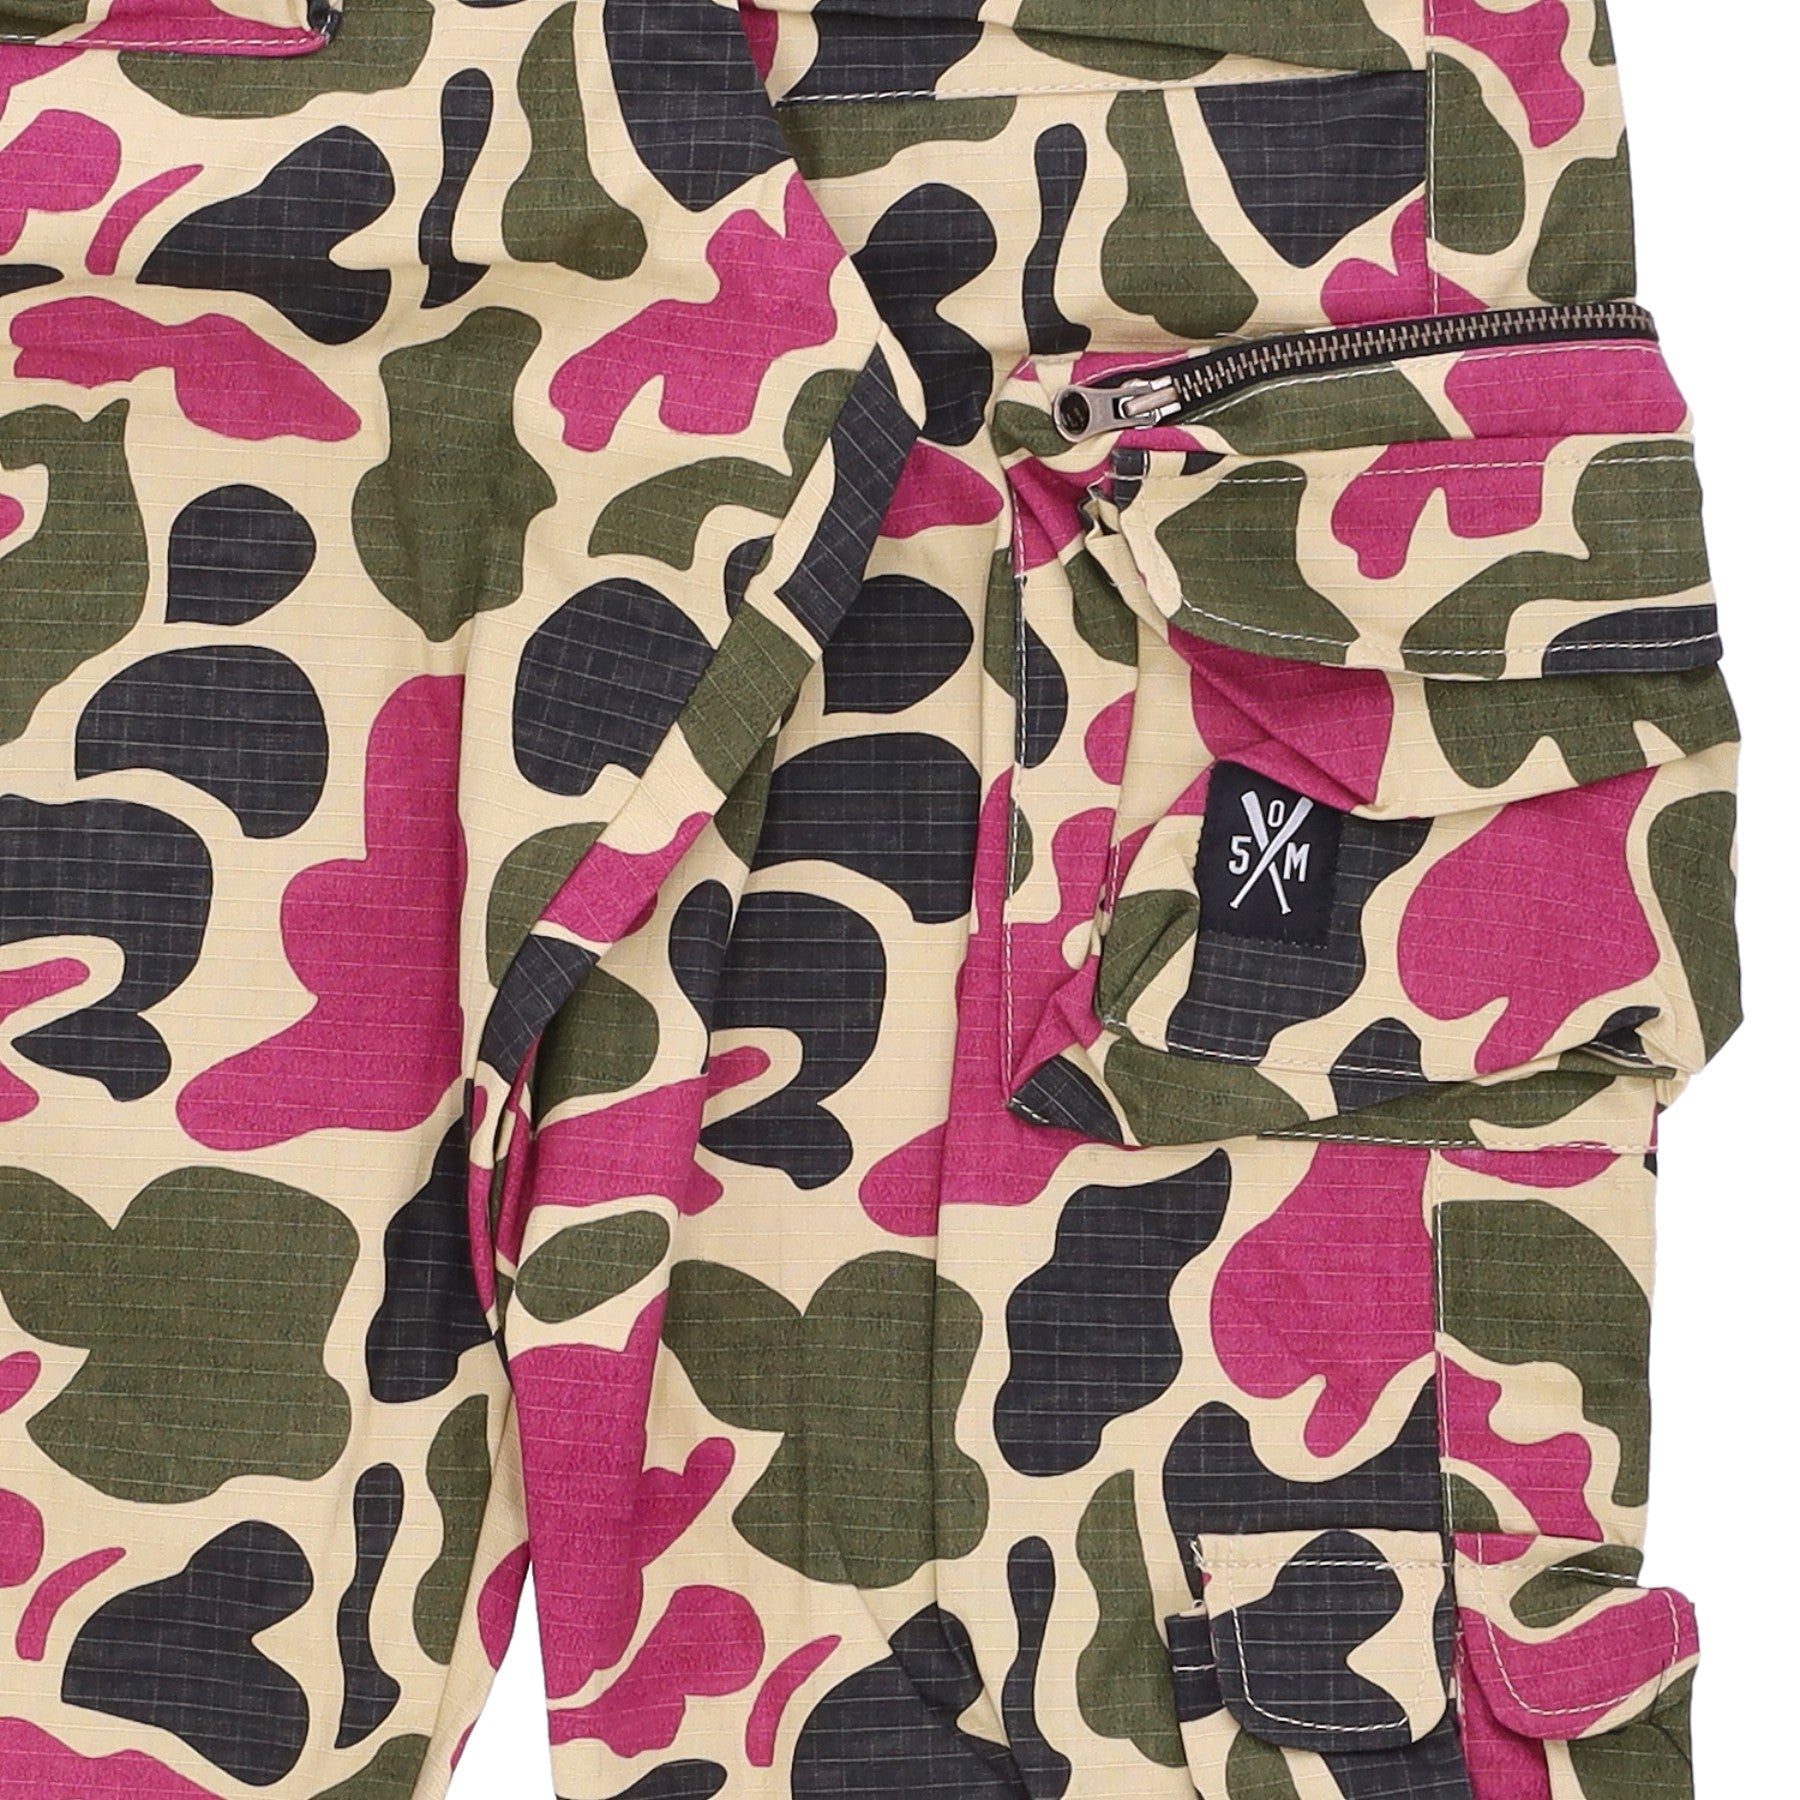 Retrofuture Men's Long Cargo Puffy Pocket Camouflage Pants